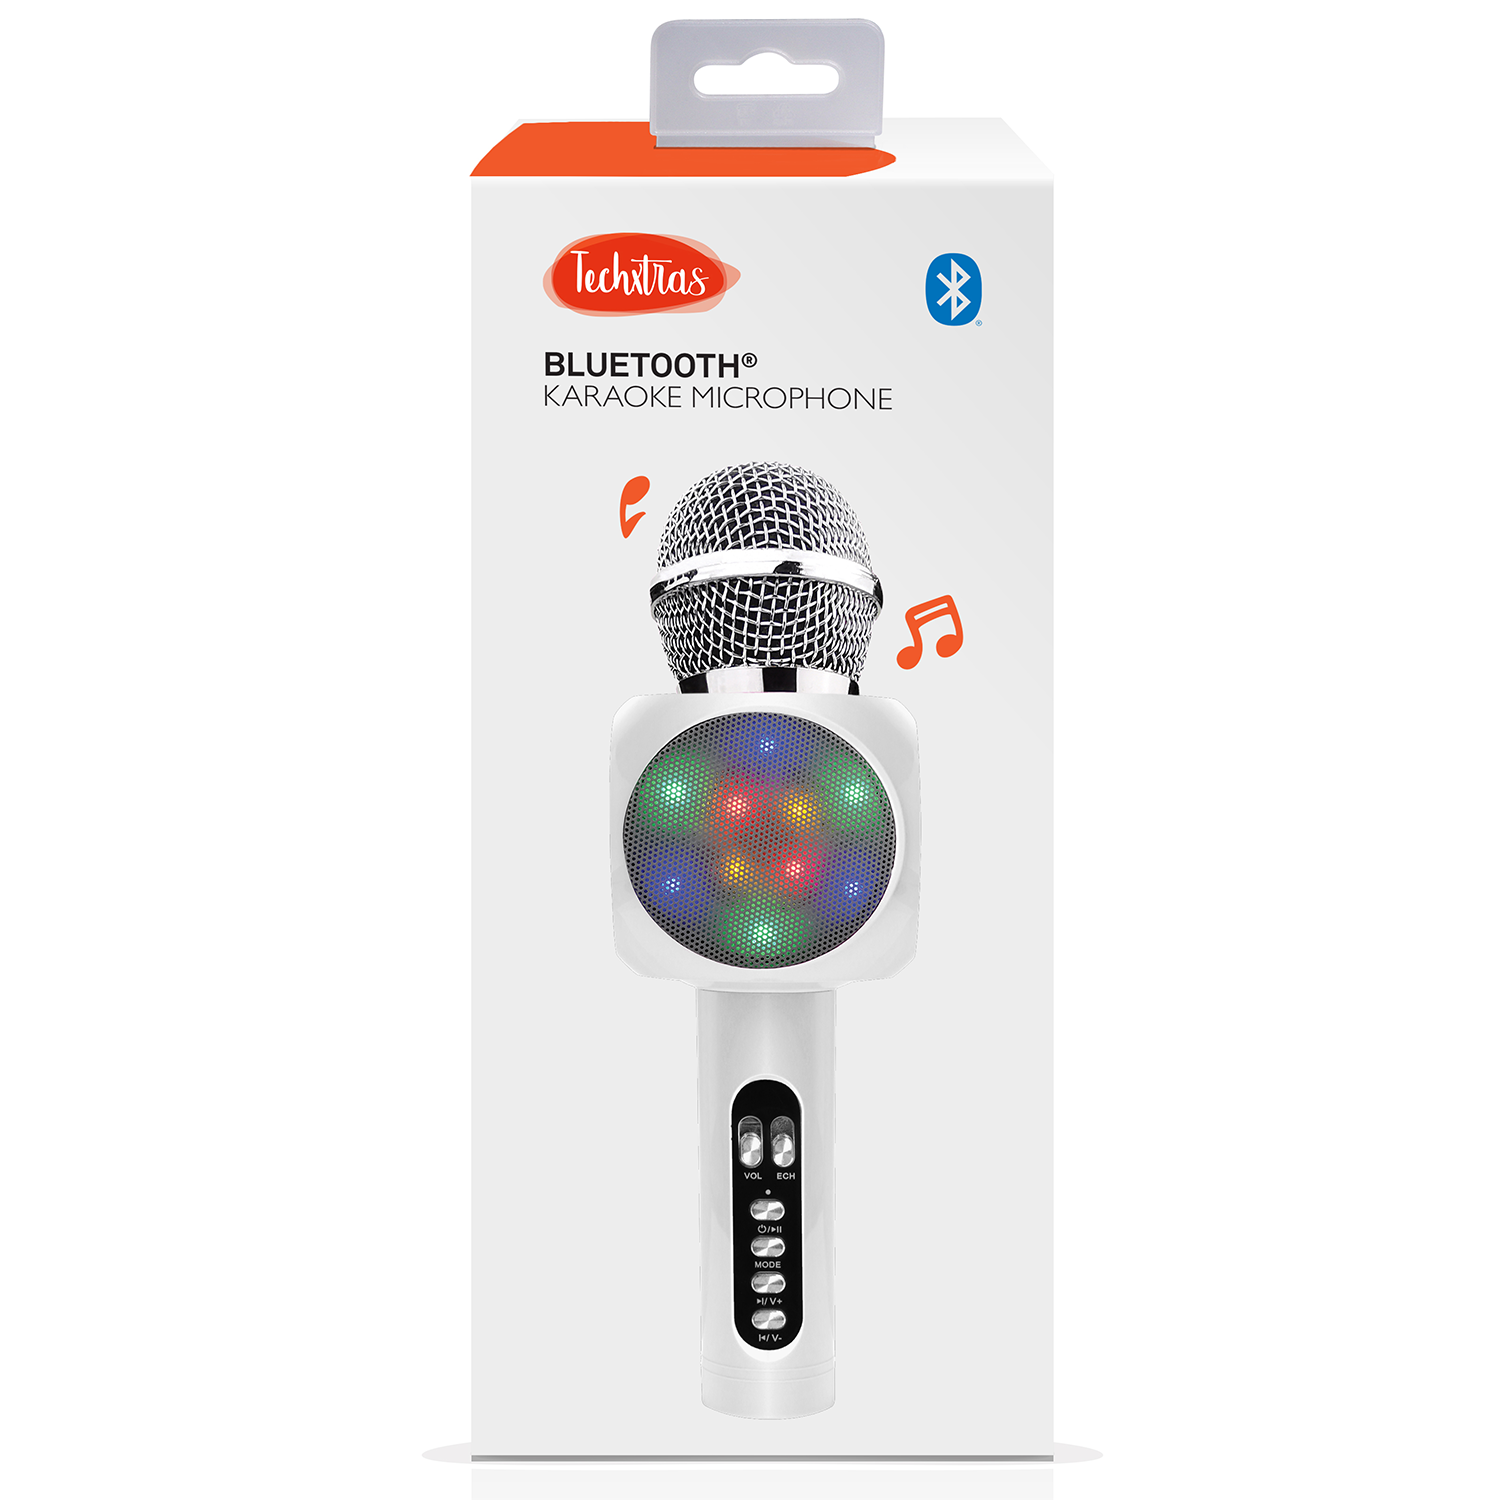 TechXtras Bluetooth Karaoke Microphone White